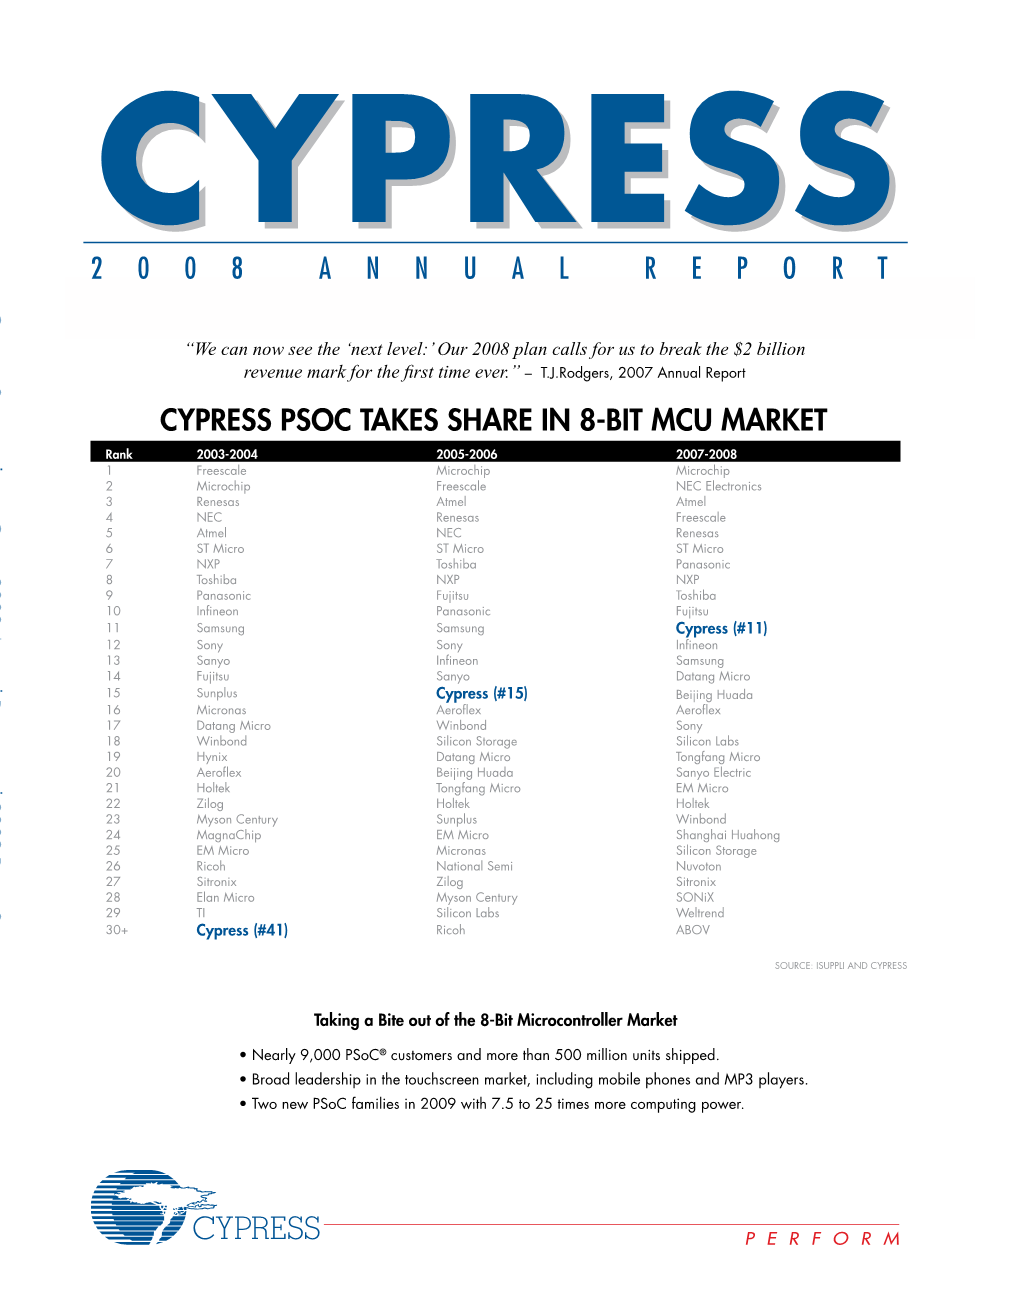 Cypress Psoc Takes Share in 8-Bit Mcu Market 2 0 0 8